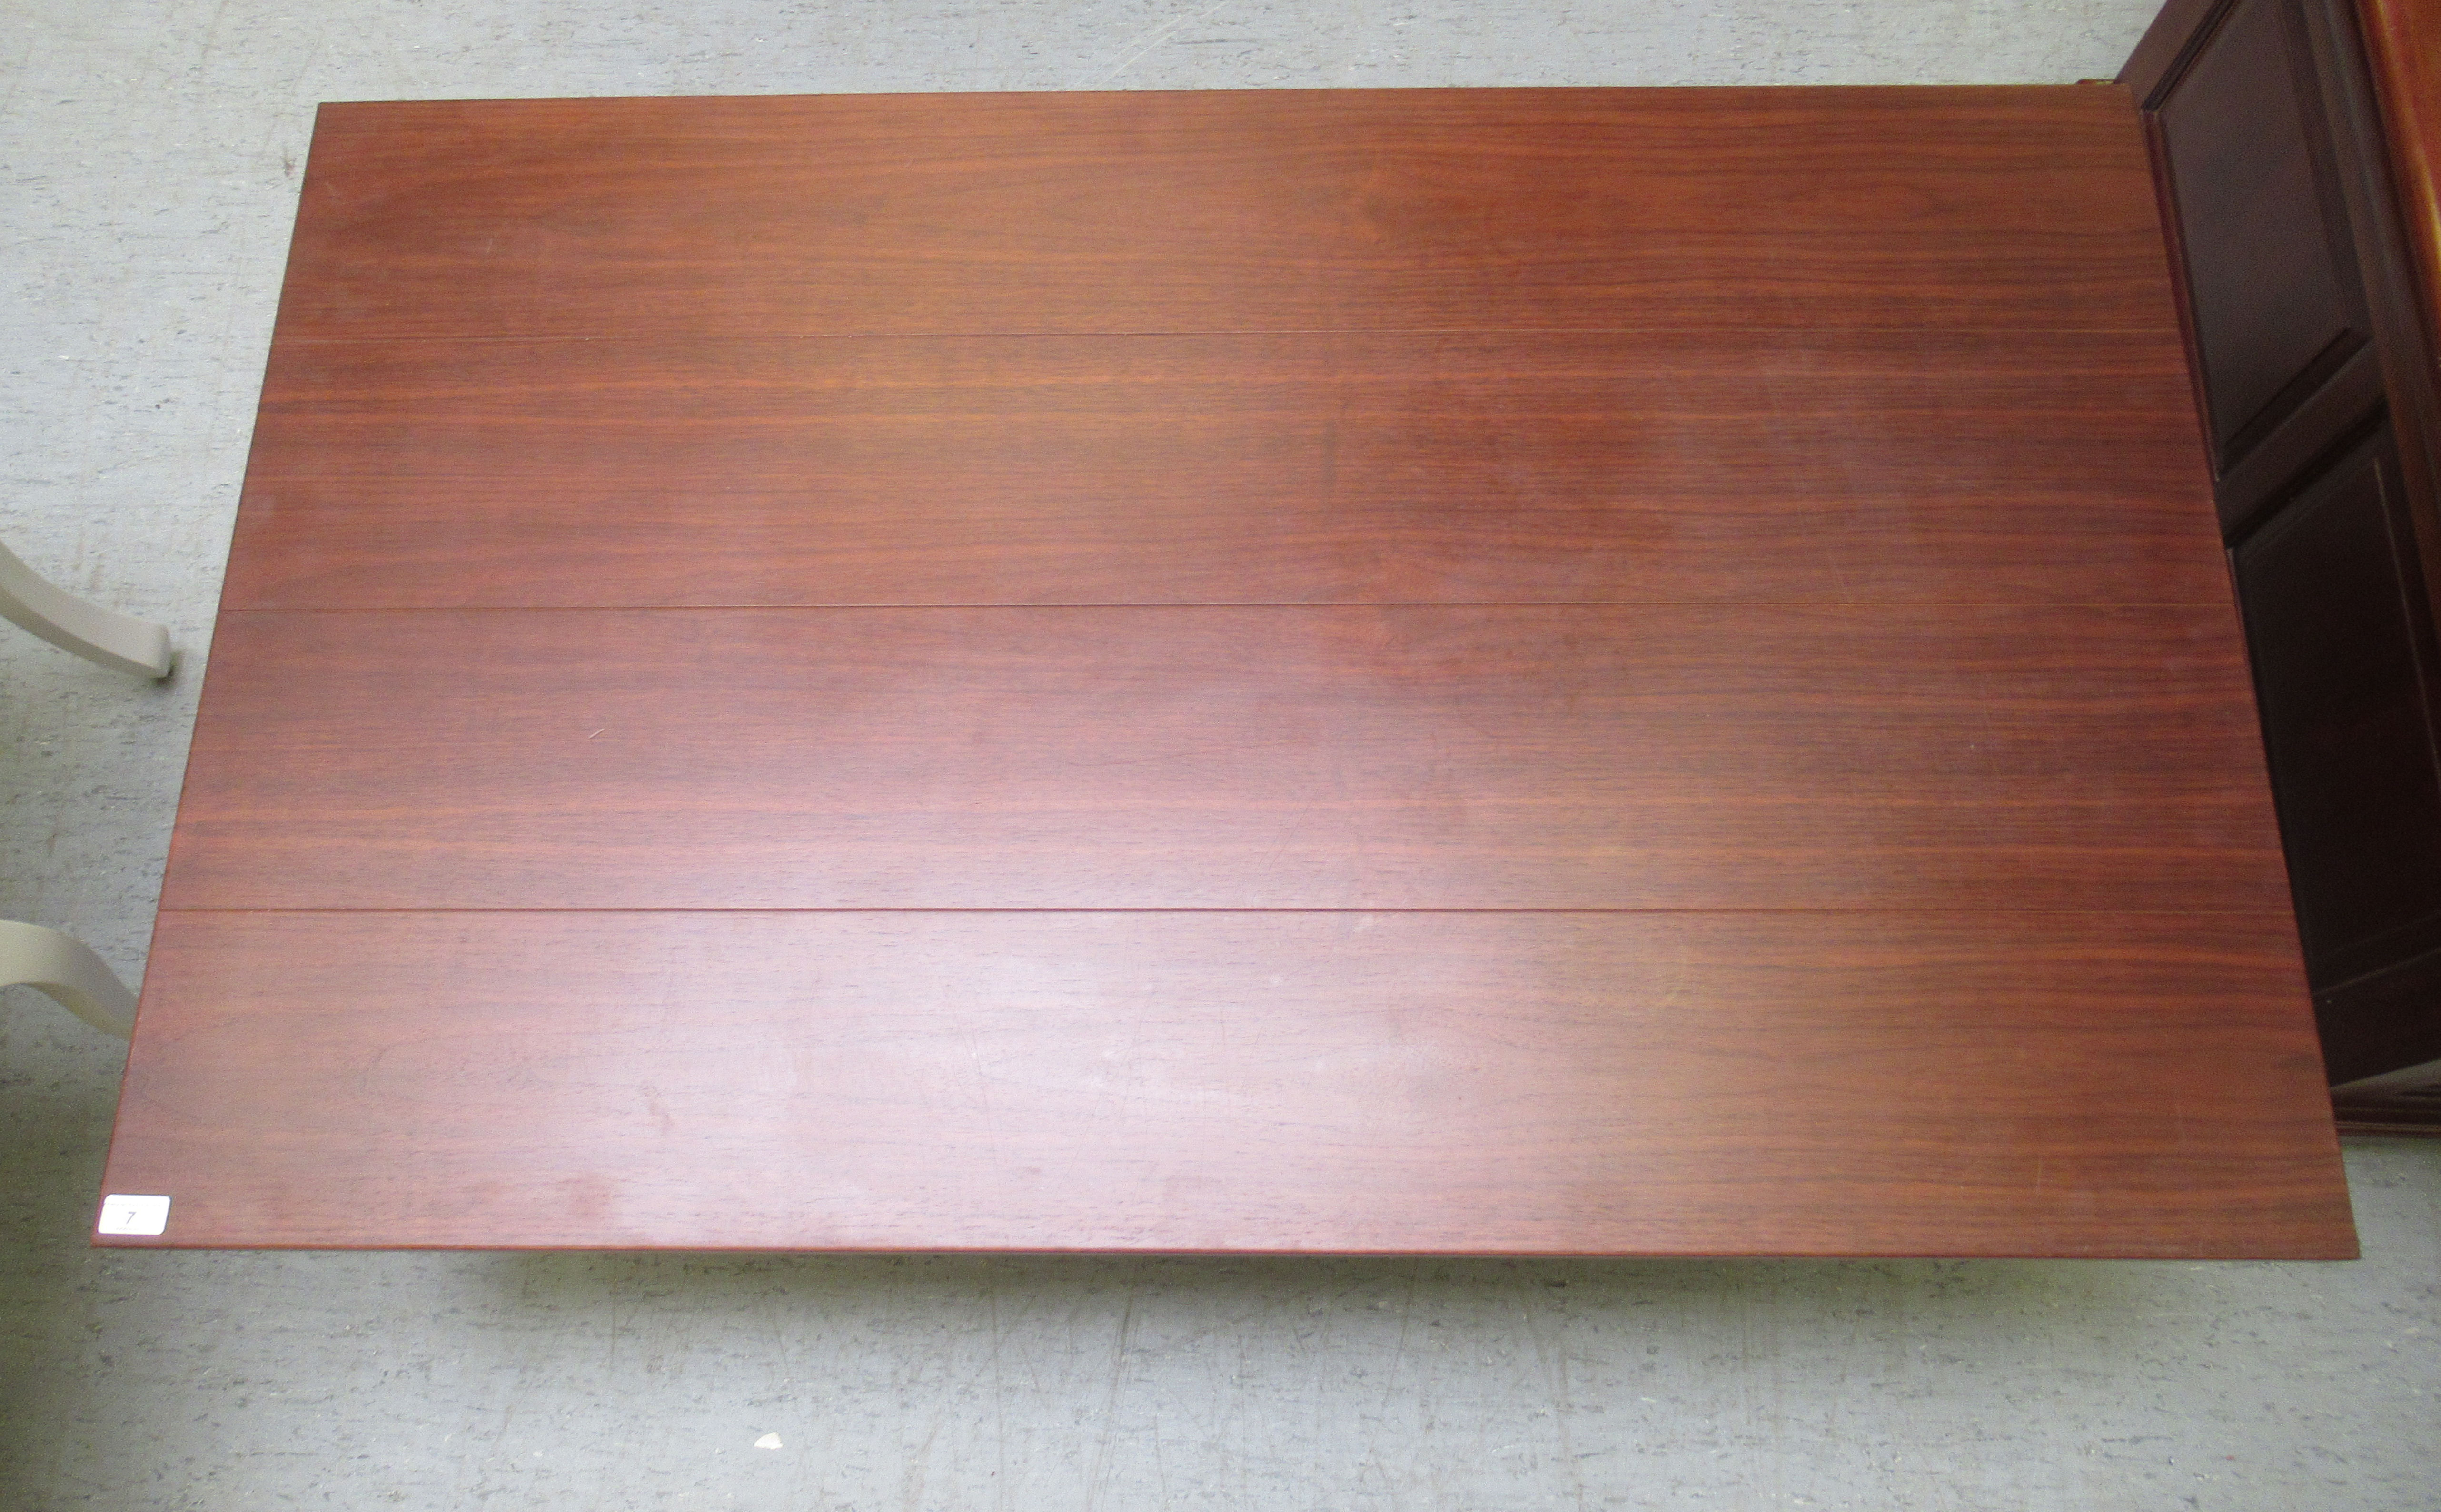 A modern teak coffee table, raised on block legs  16"h  51"w  31"deep - Image 2 of 3